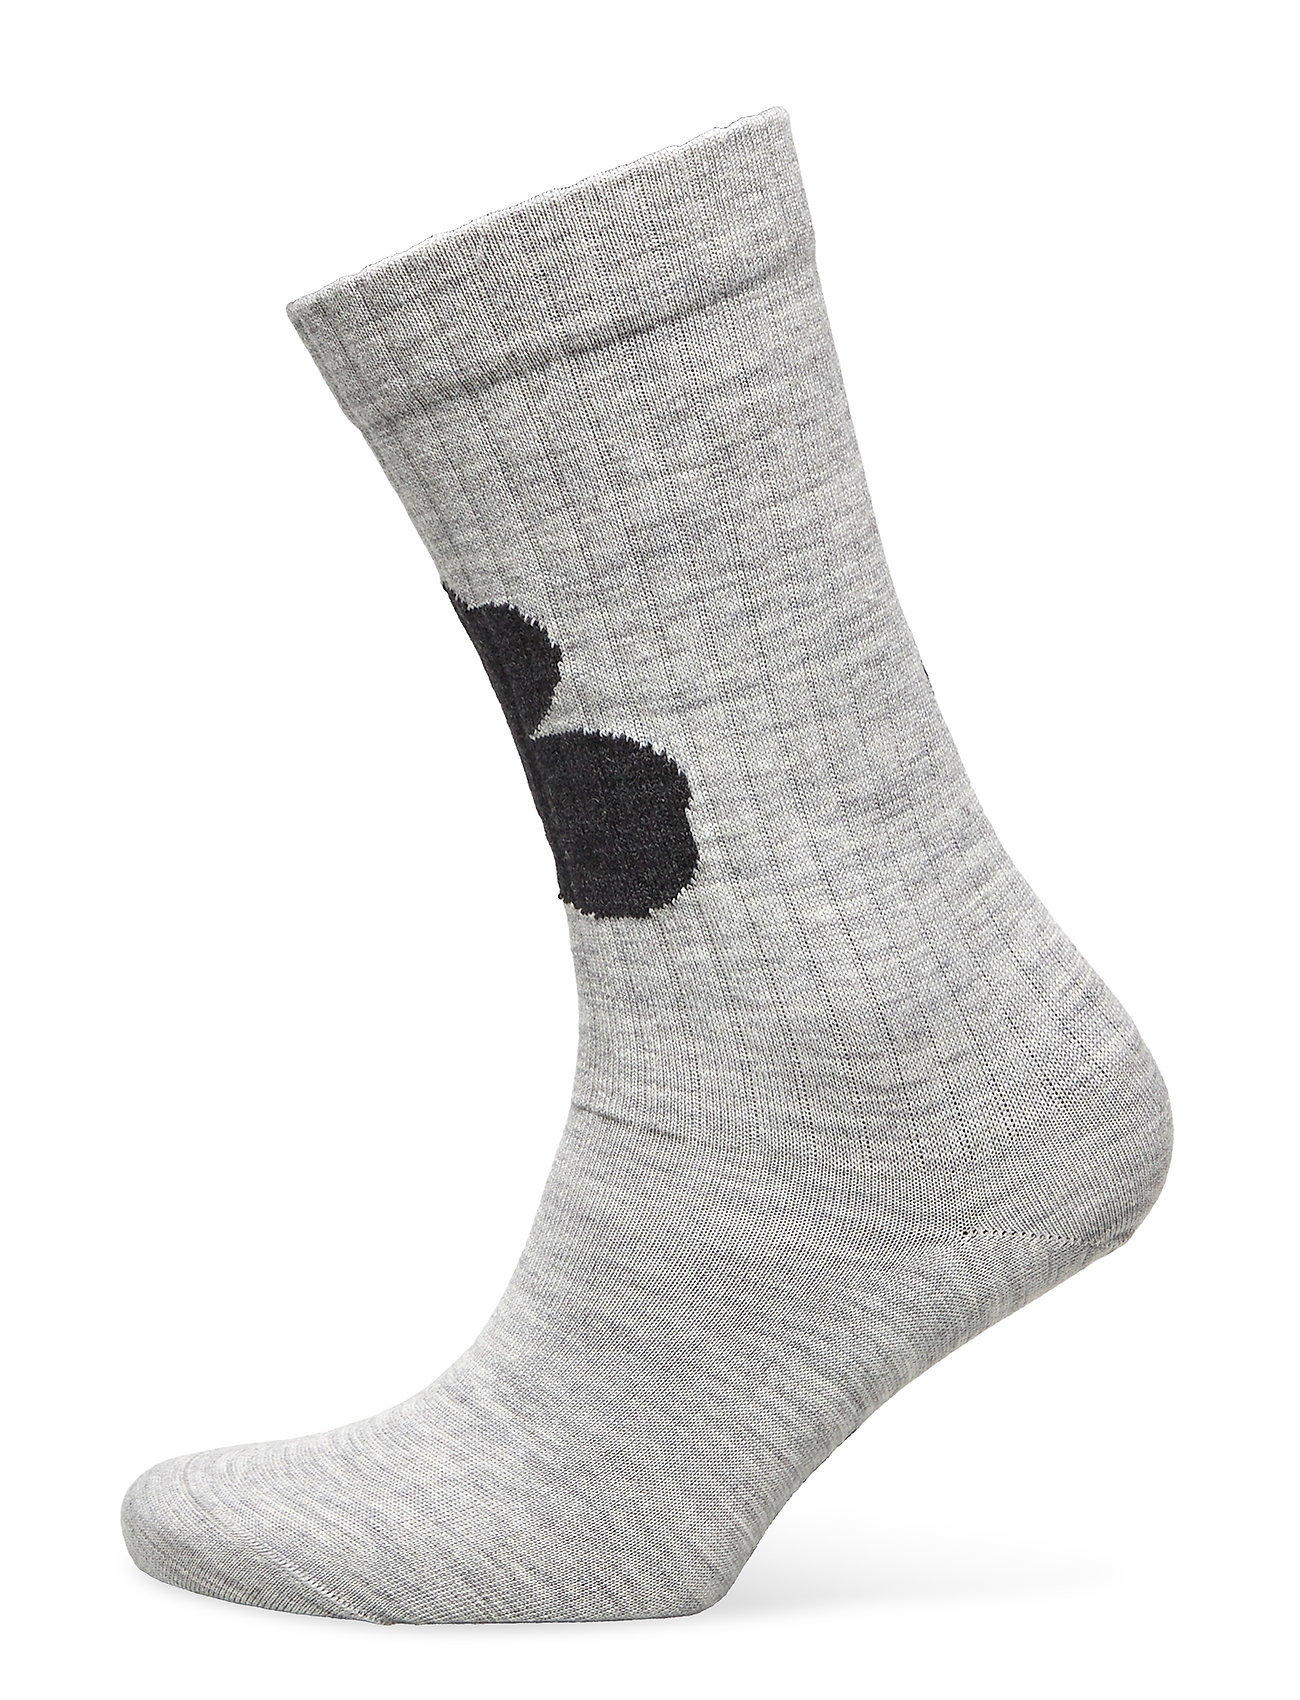 Kuusi Unikko Placement Socks Lingerie Socks Regular Socks Harmaa Marimekko